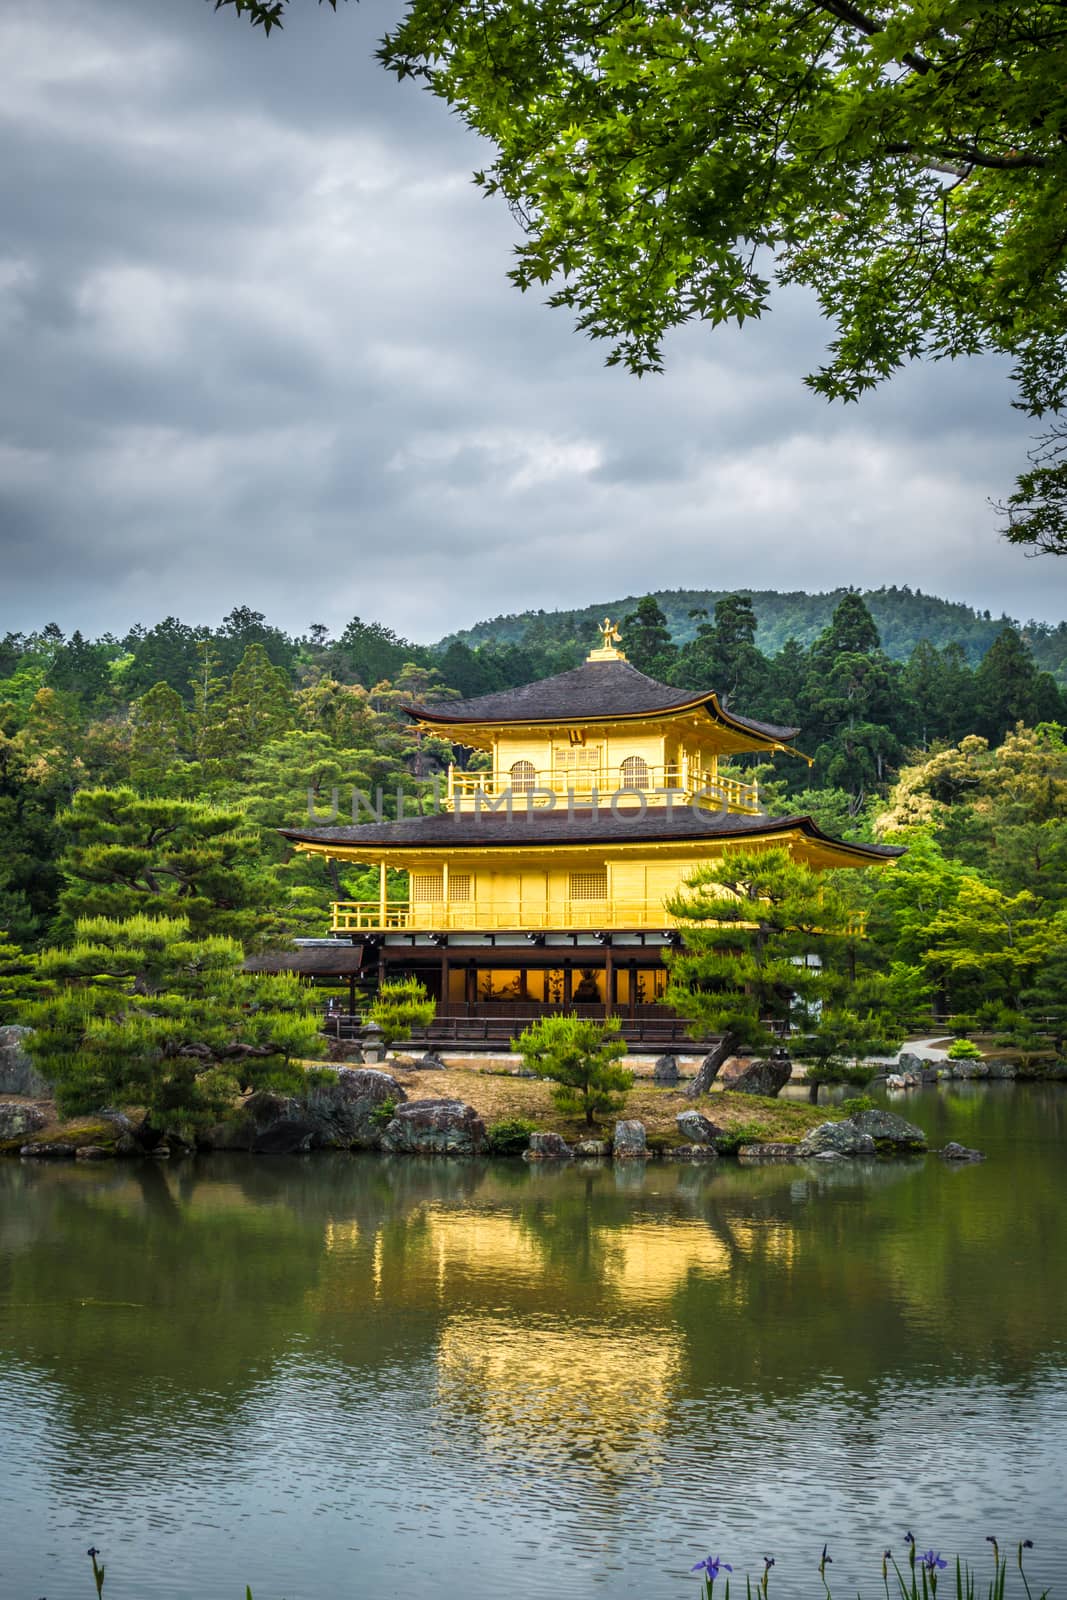 Kinkaku-ji golden temple, Kyoto, Japan by daboost